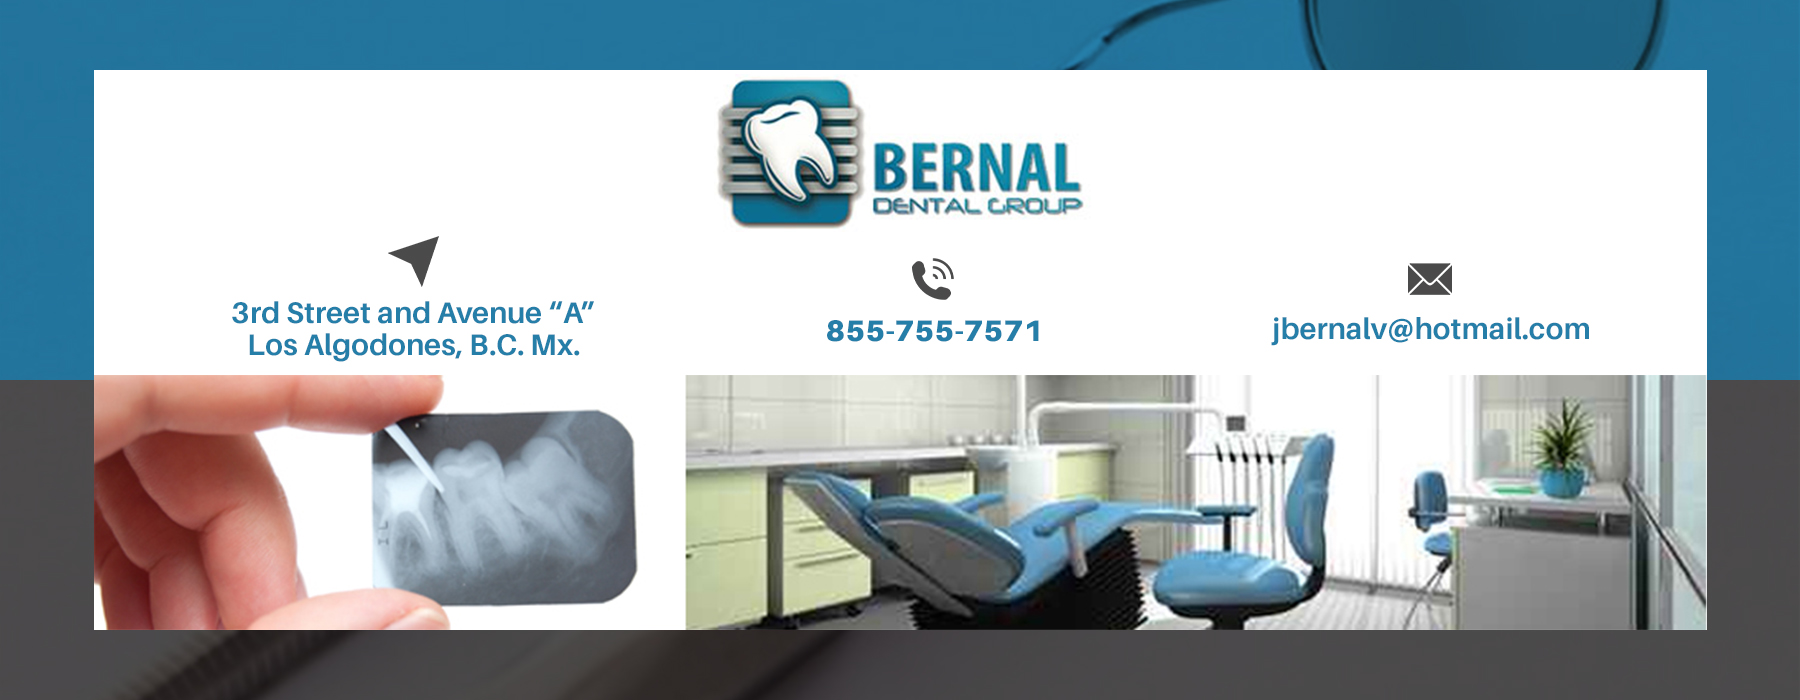  Bernal Dental Group